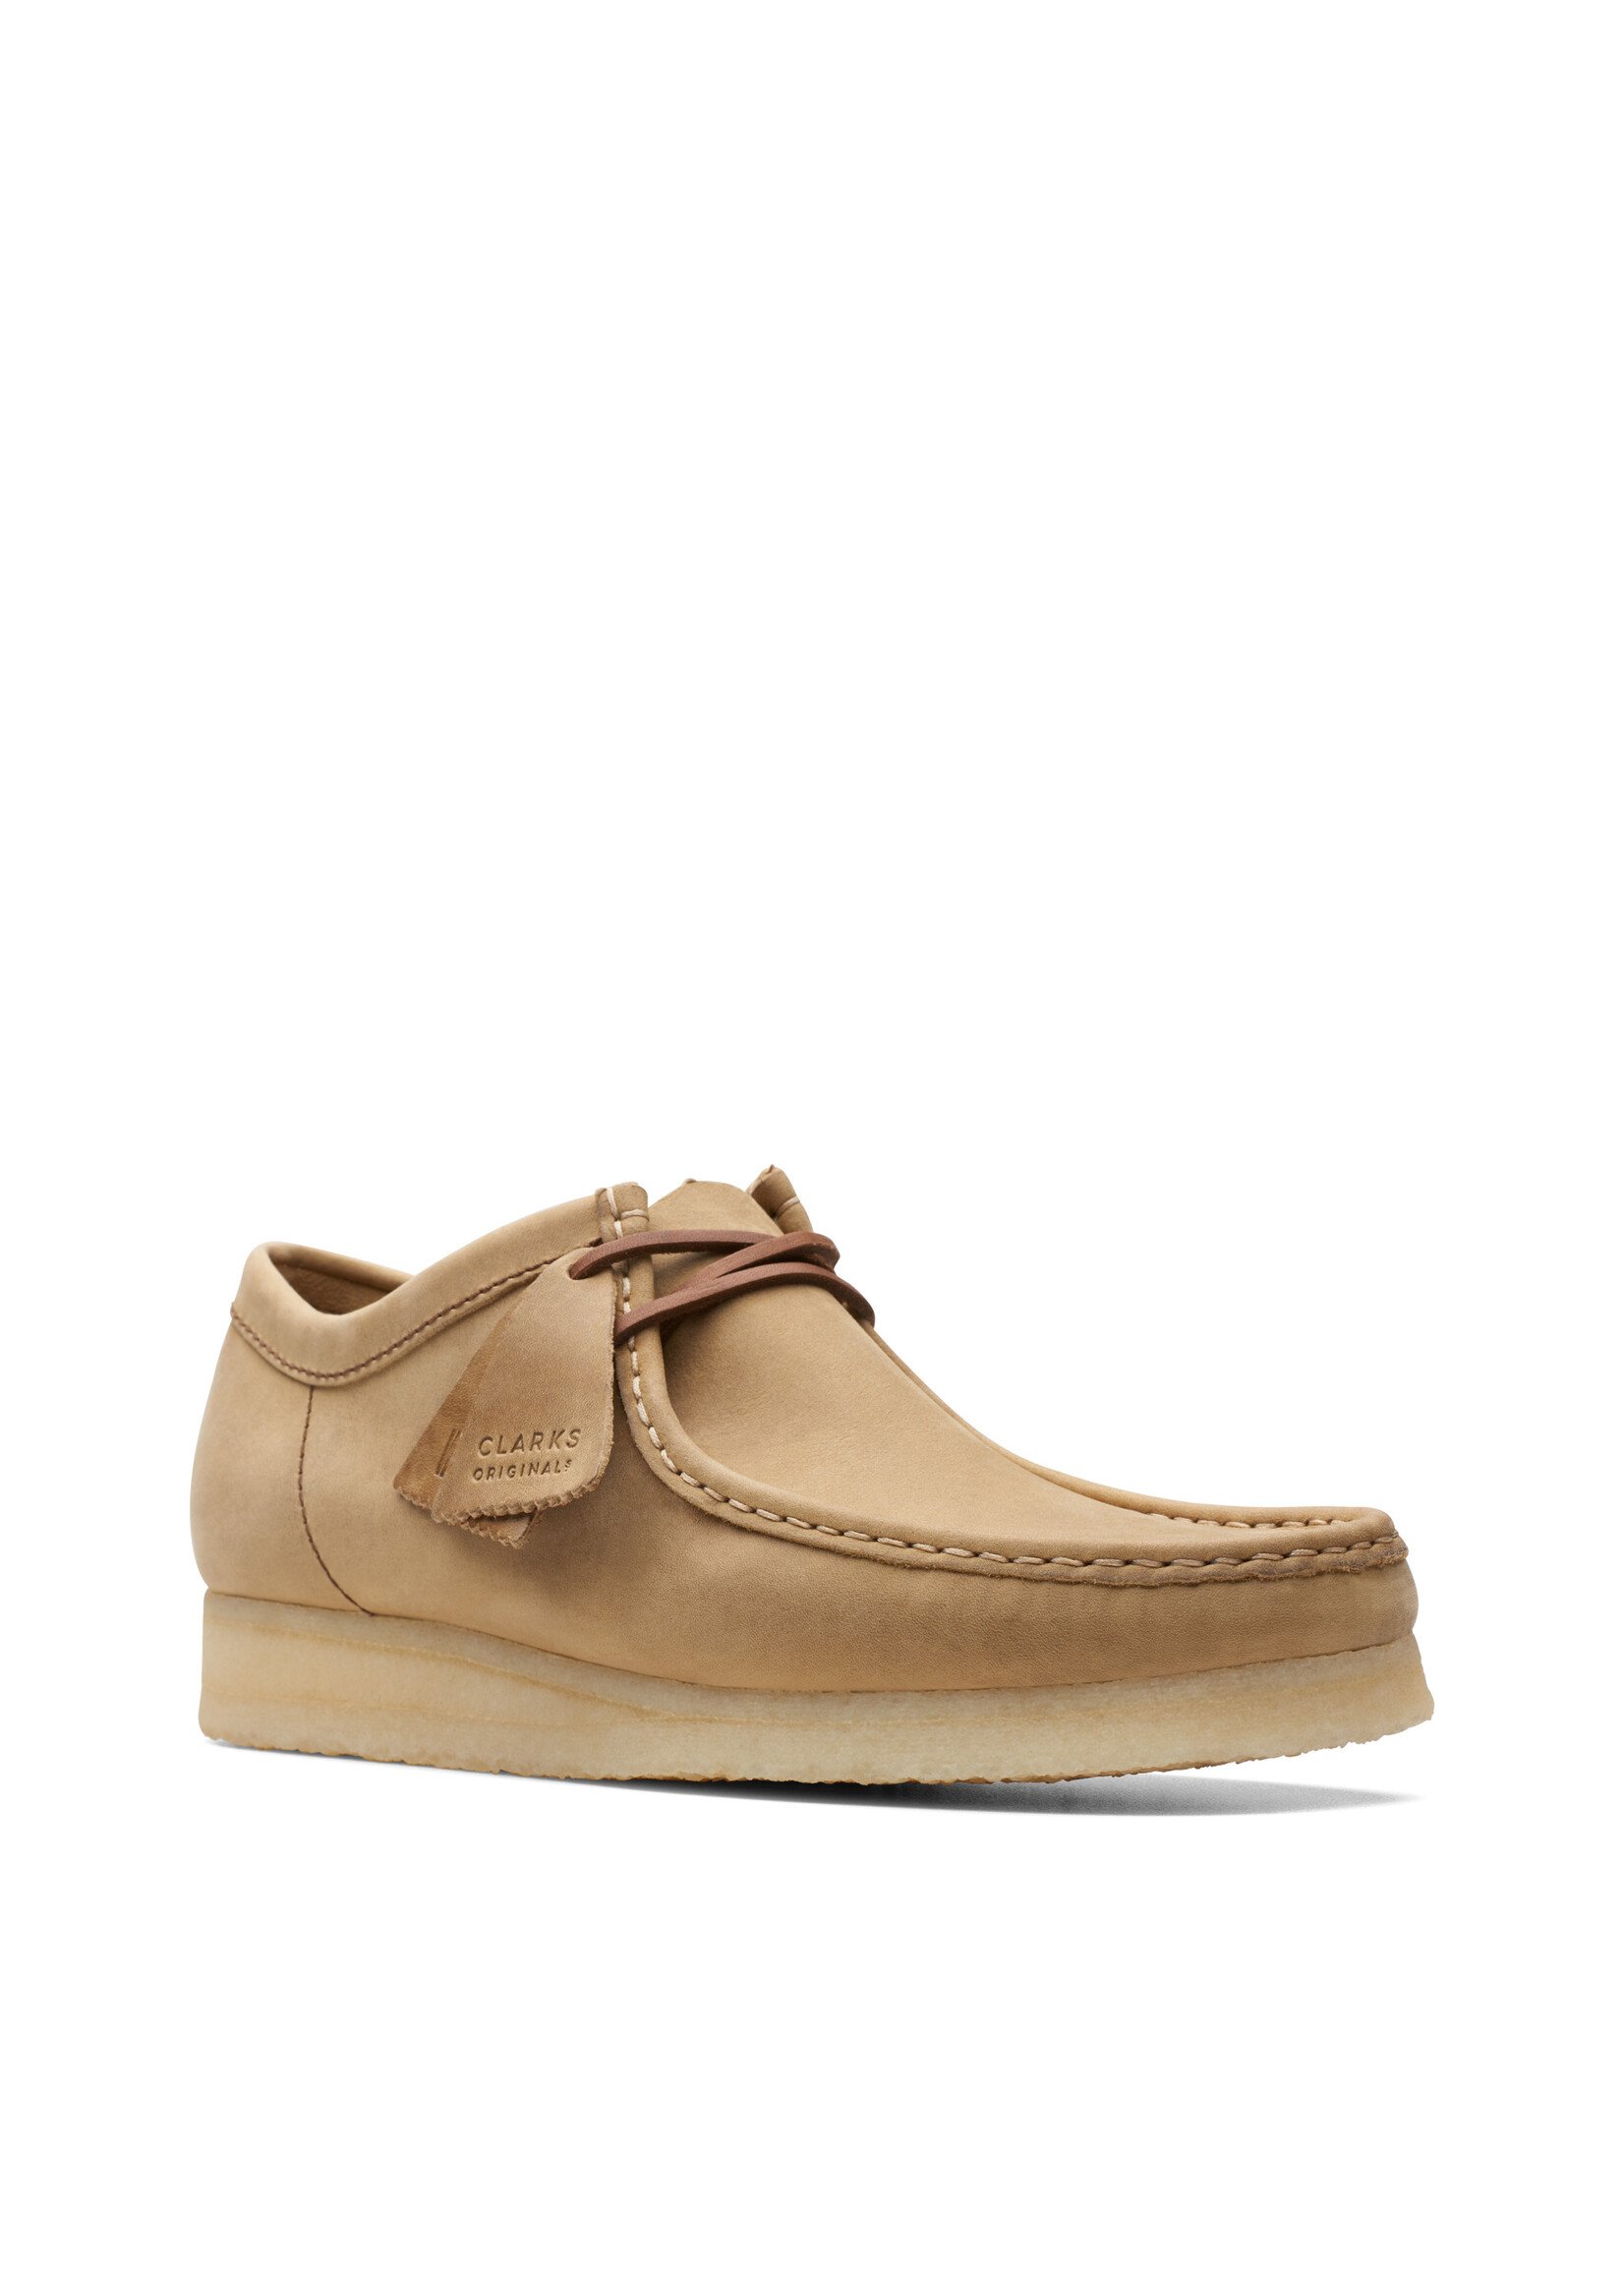 Wallabee Mens Originals Shoes Brown Leather | 26174510 - SHOE PLUS 